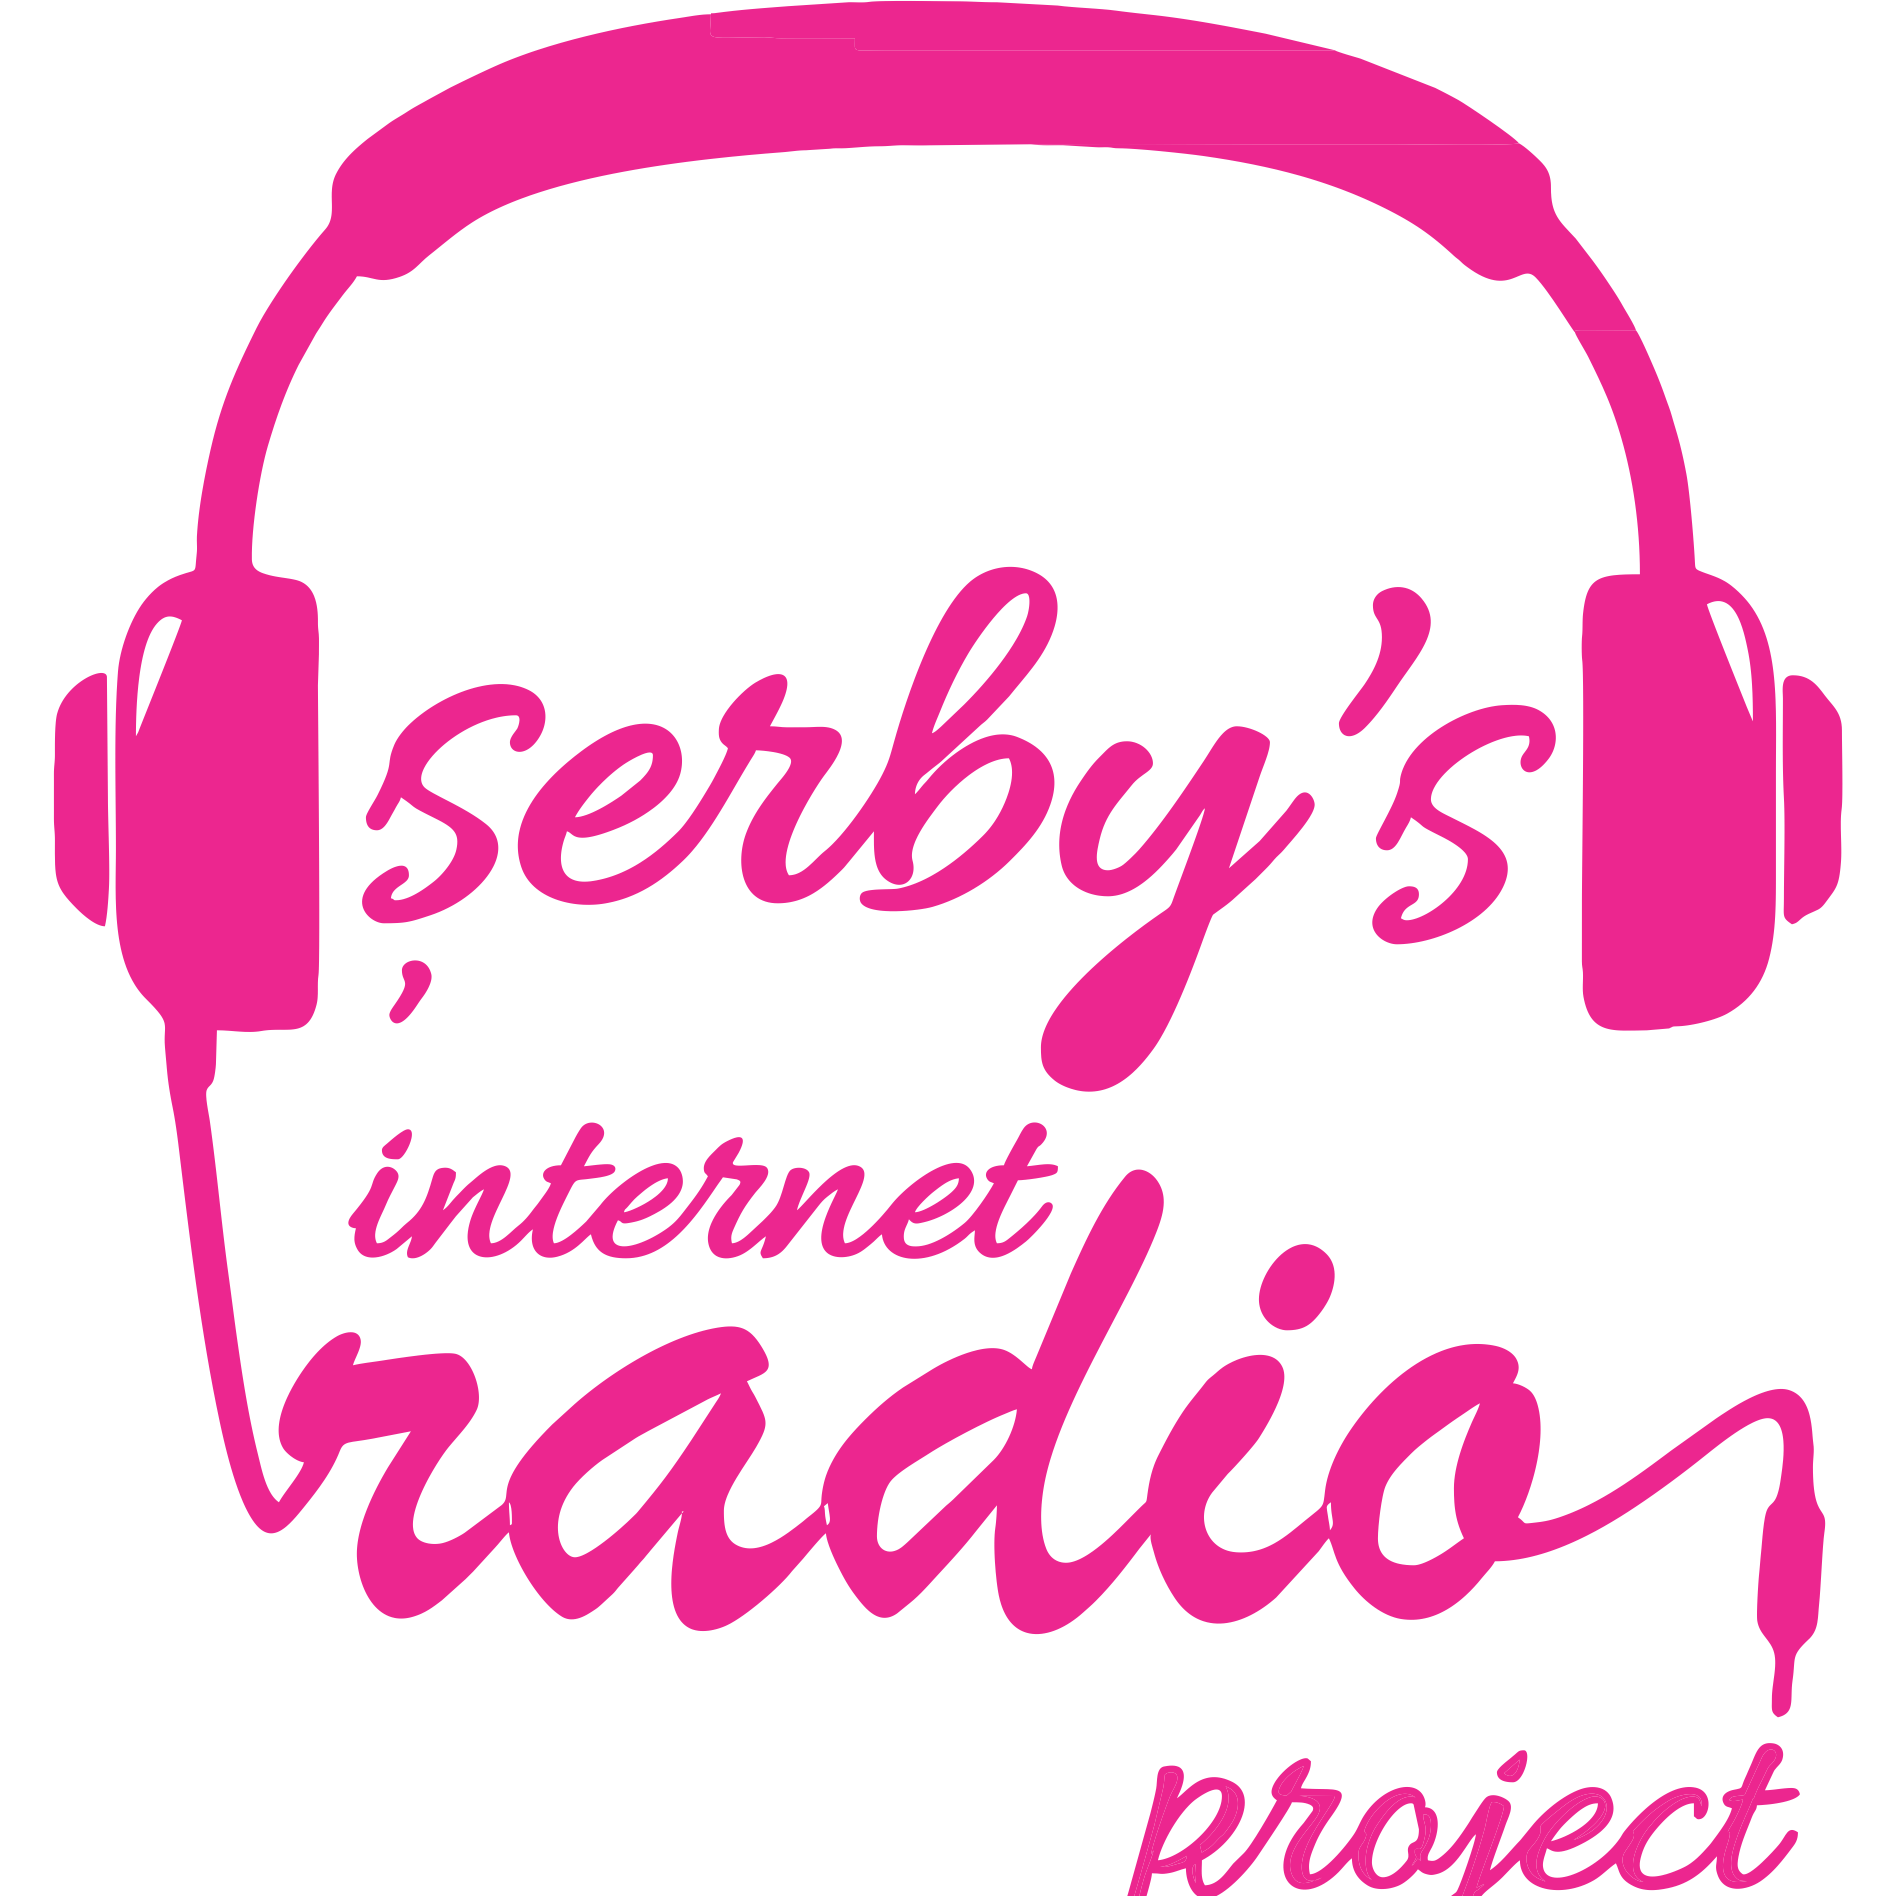 Serby's Internet Radio project